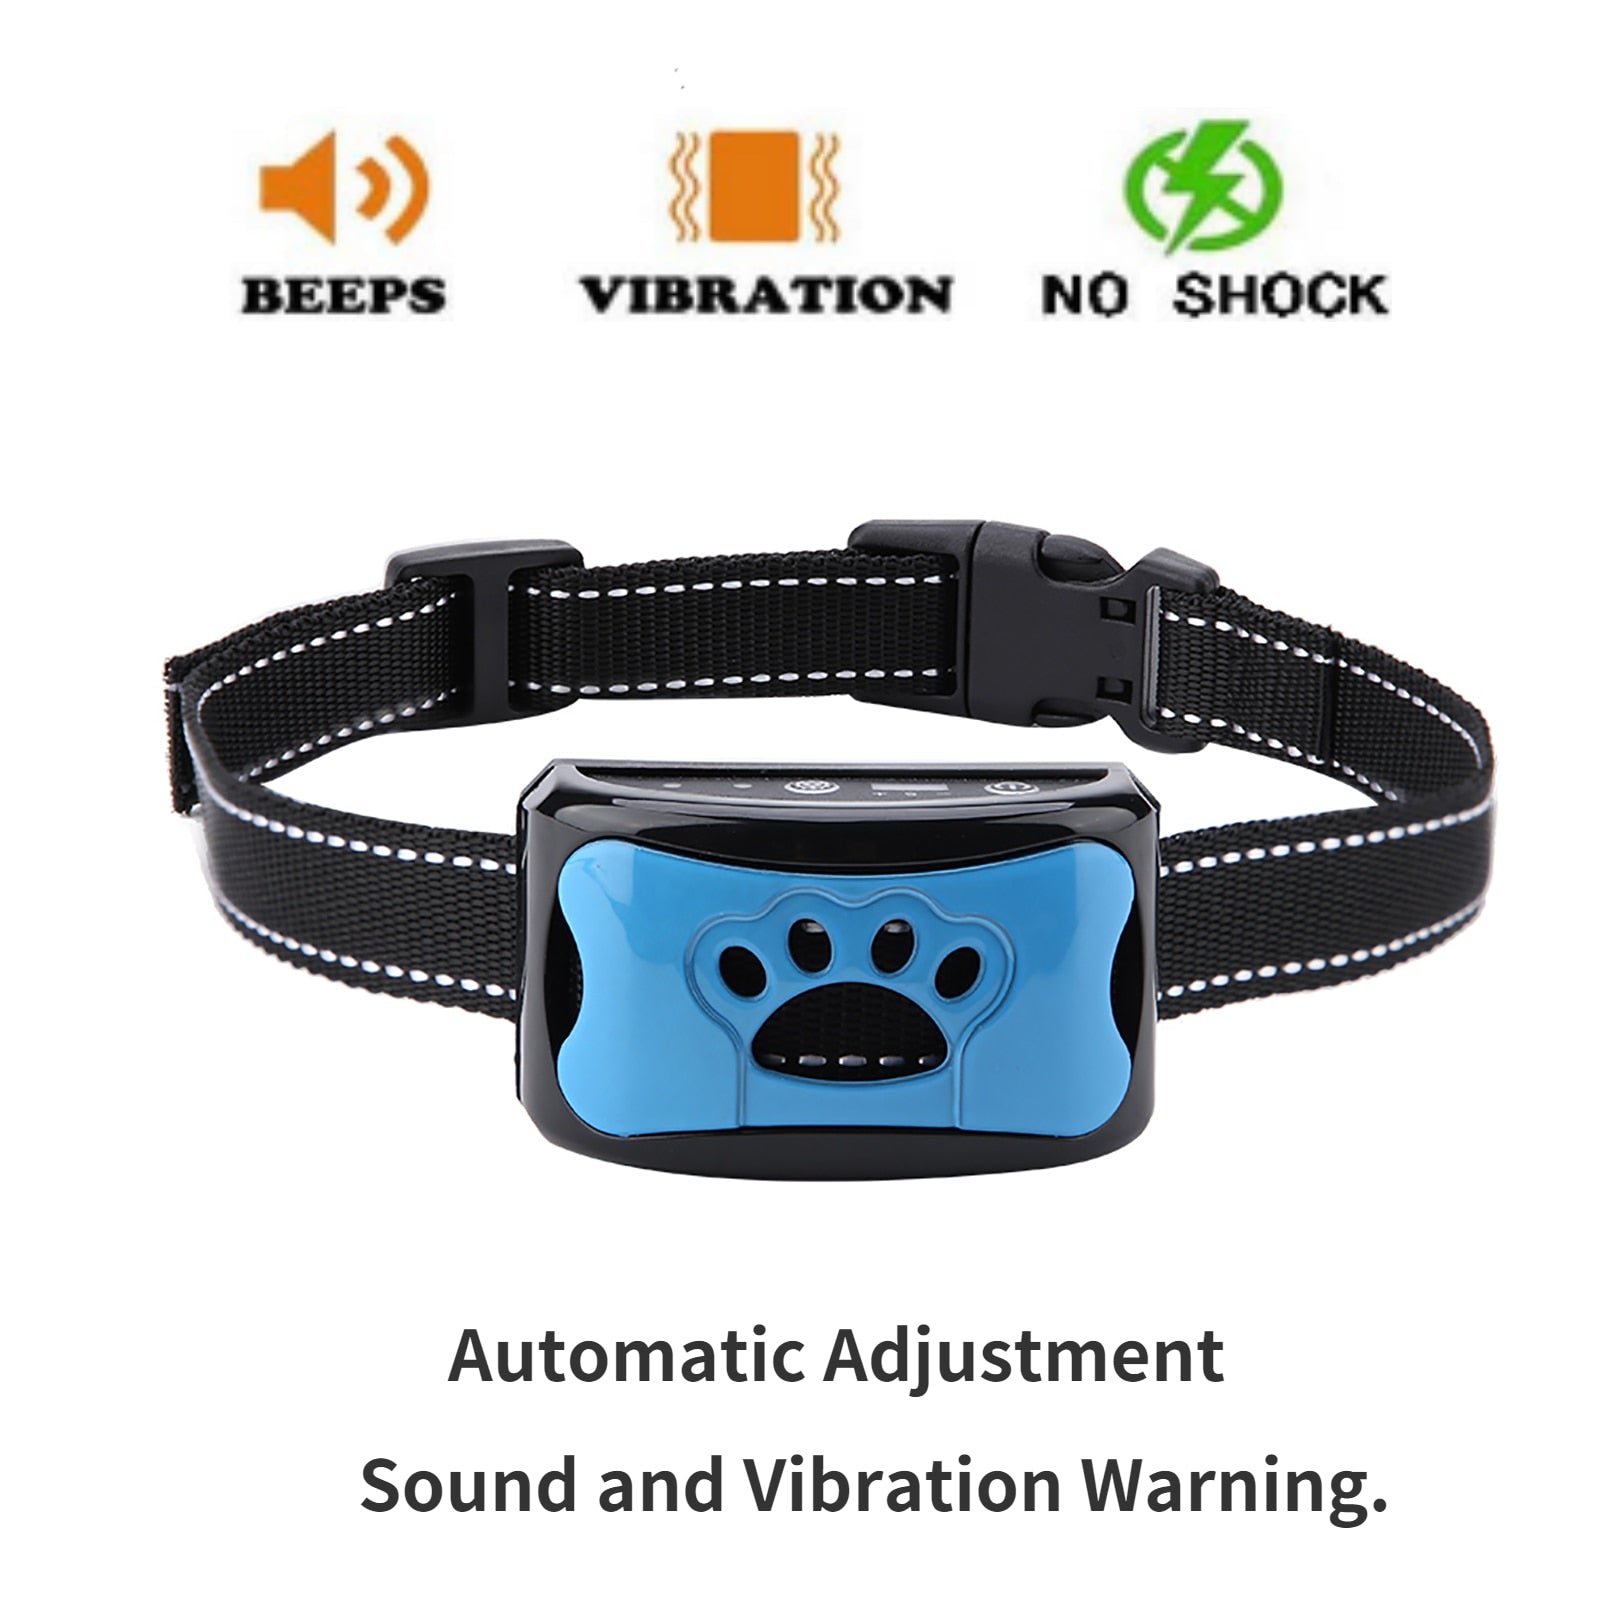 Pet Dog Anti Barking Device USB Electric Ultrasonic Stop Barking Training Collar